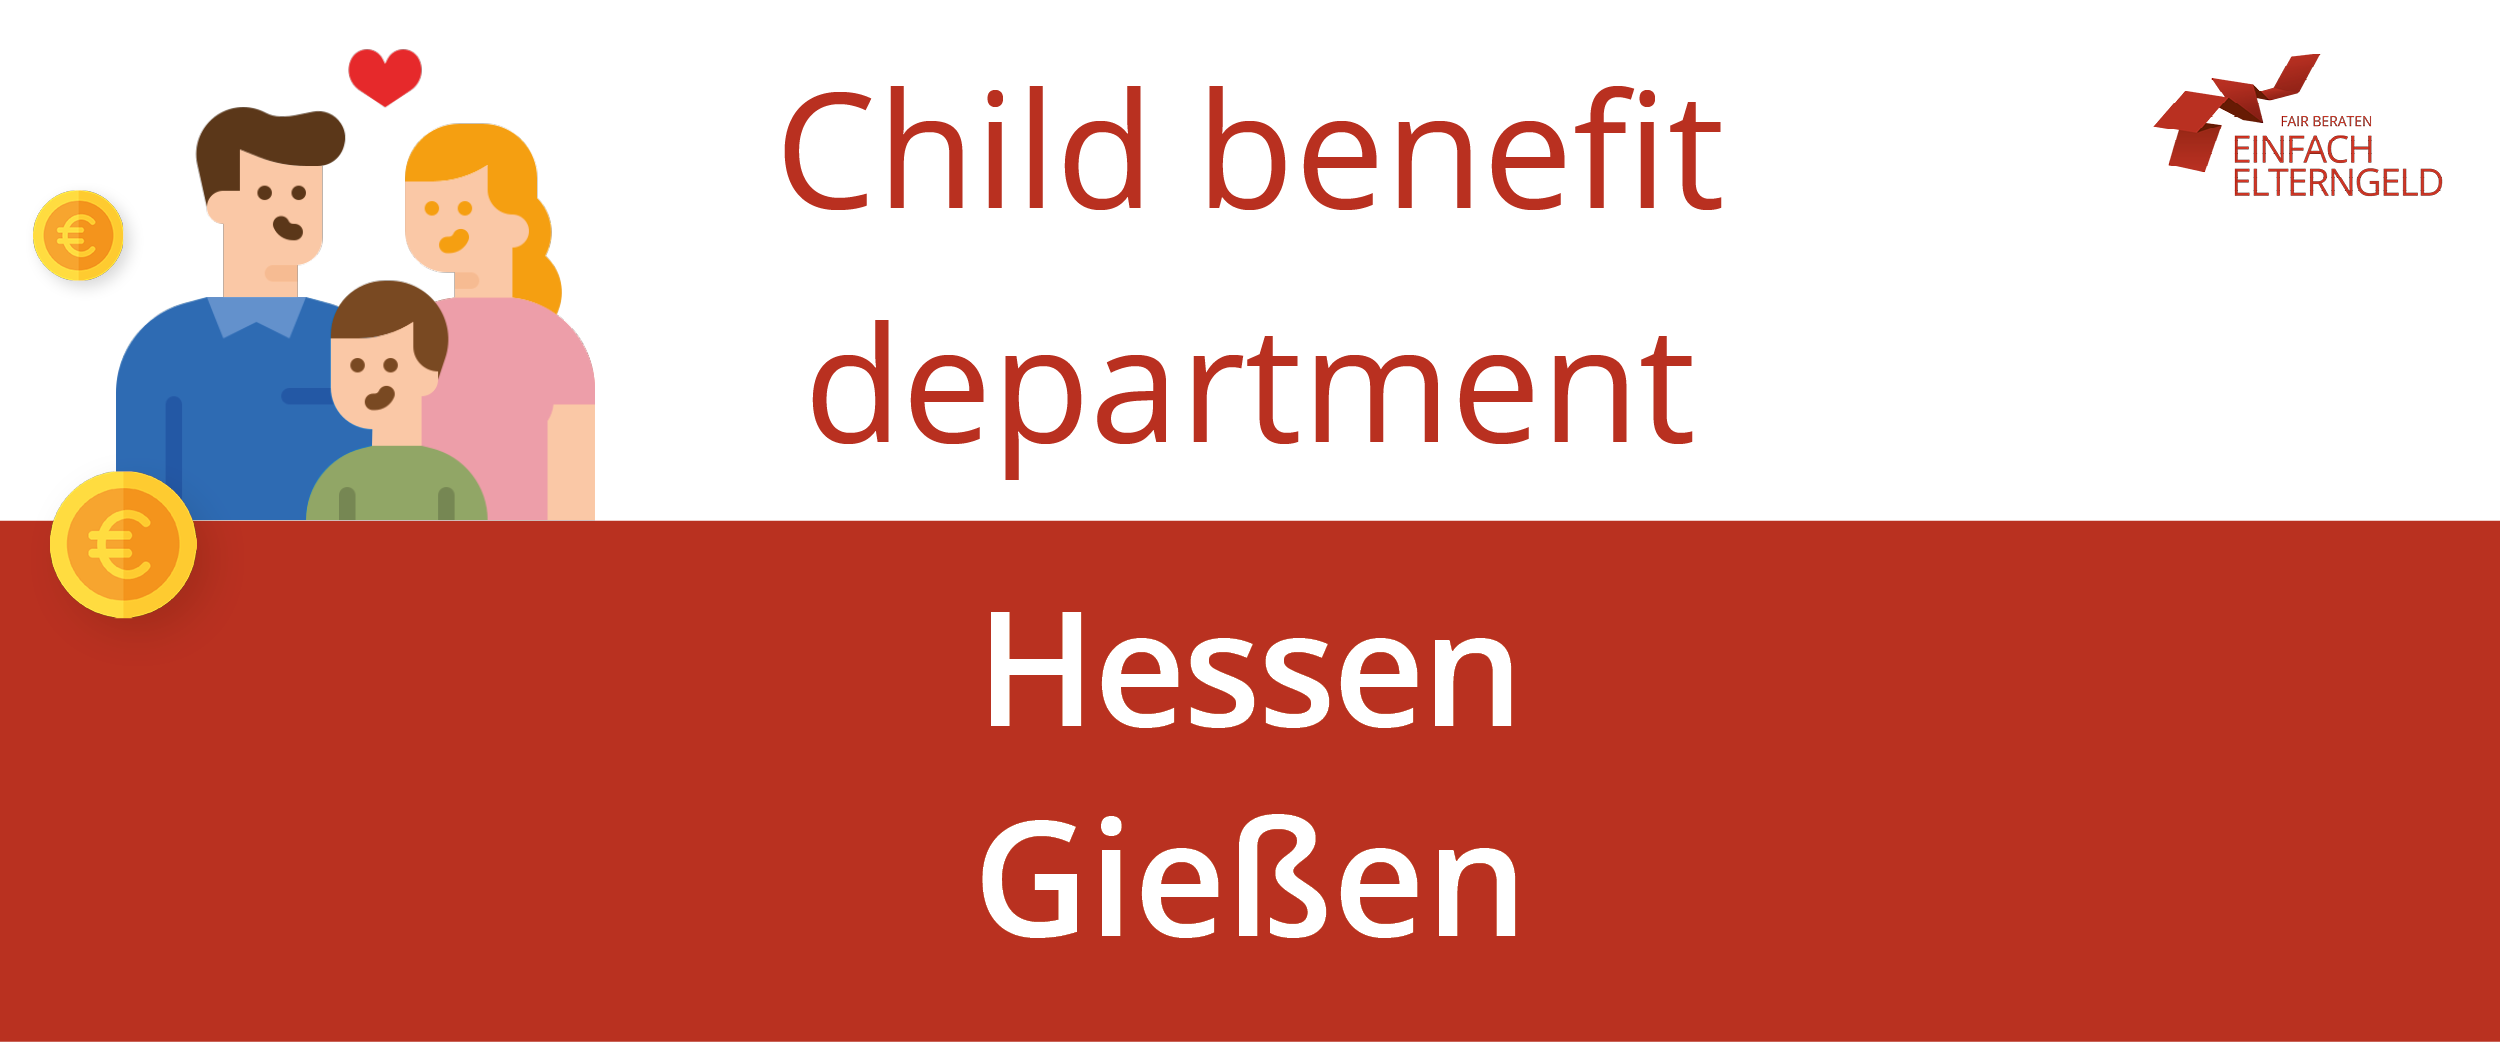 We present you the Child benefit department Hessen Gießen.